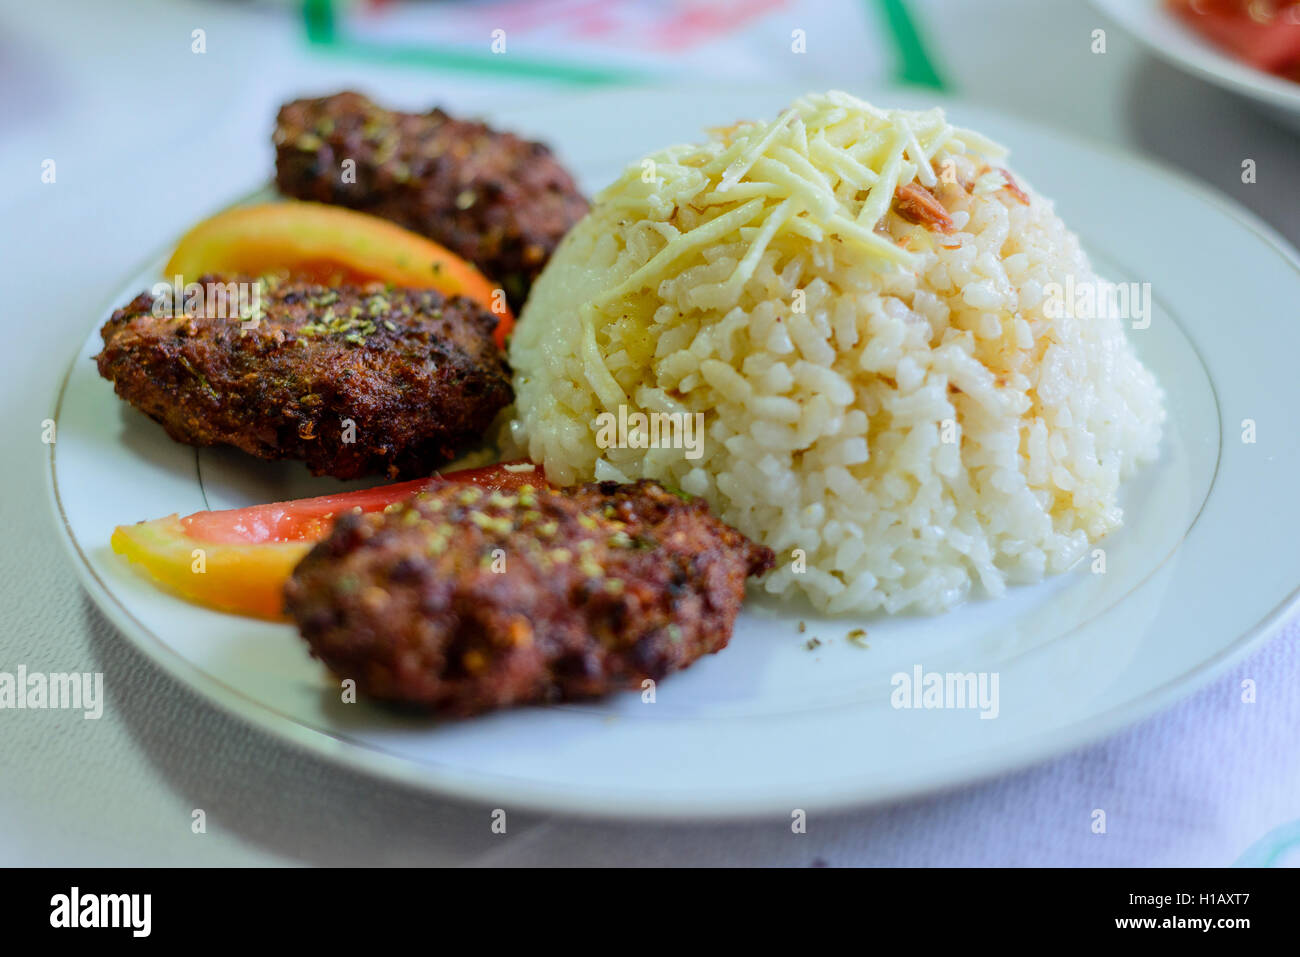 Comida albanesa fotografías e imágenes de alta resolución - Alamy